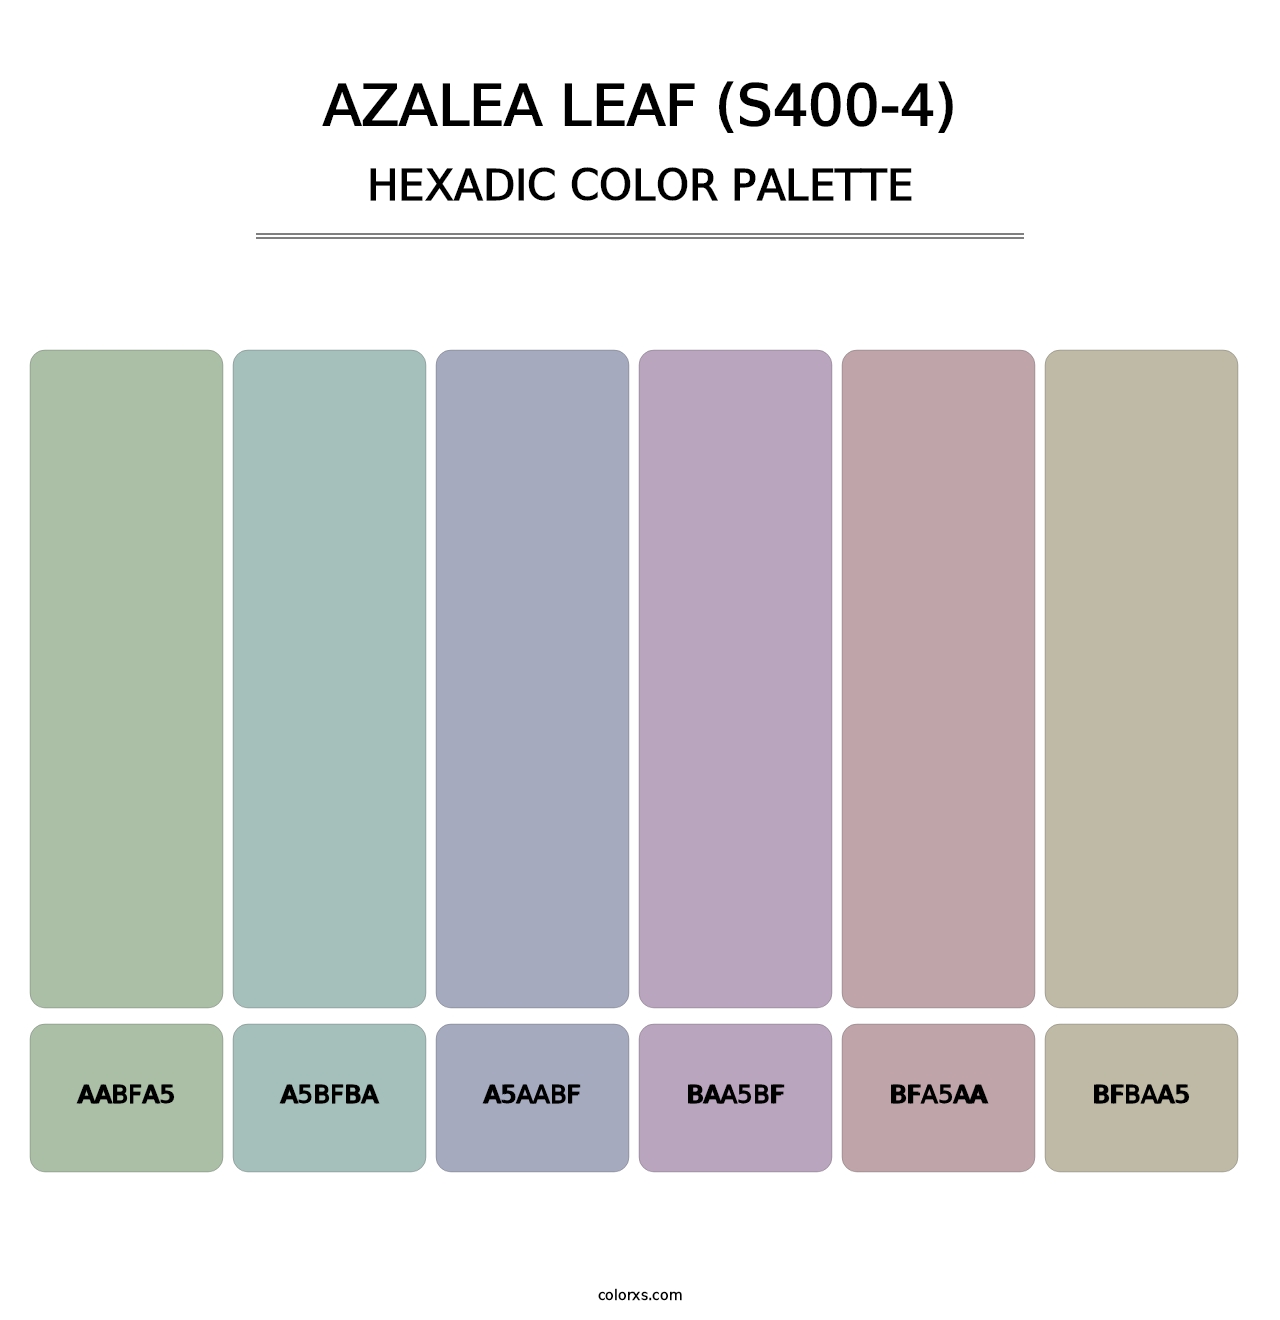 Azalea Leaf (S400-4) - Hexadic Color Palette